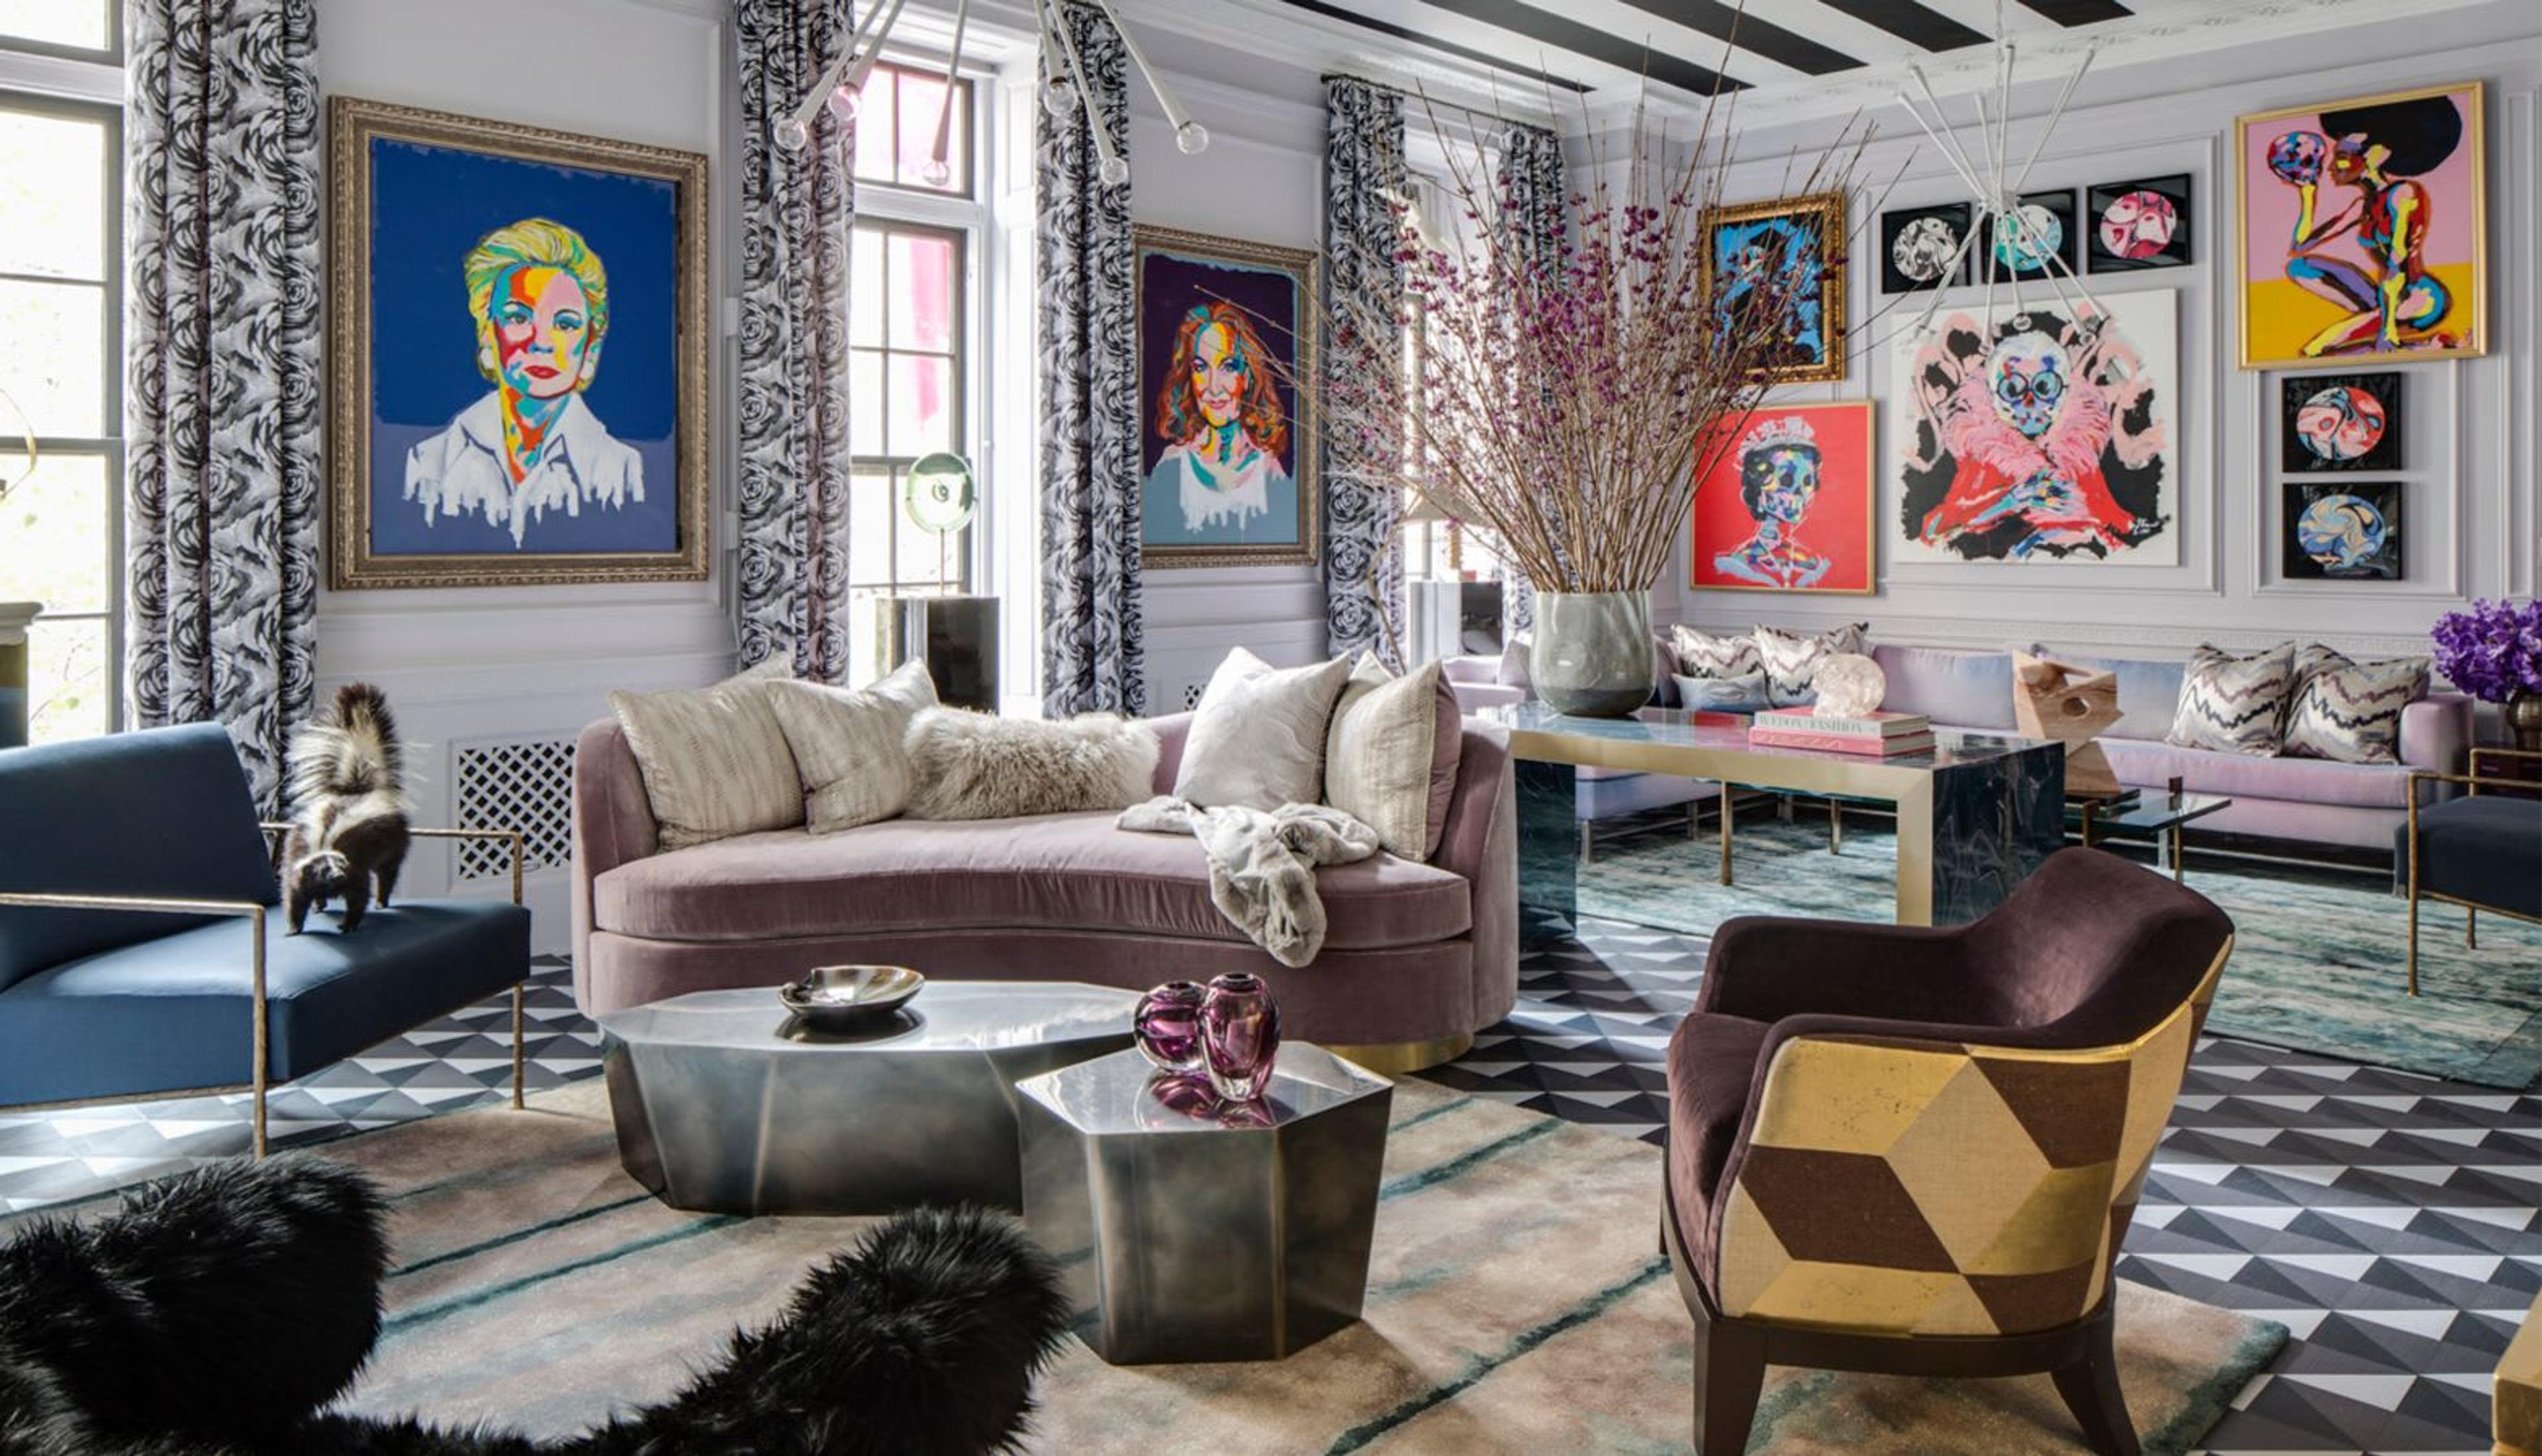 Salon Holiday House d'Antonino Buzzetta Design avec une collection de peintures de Bradley Theodore.